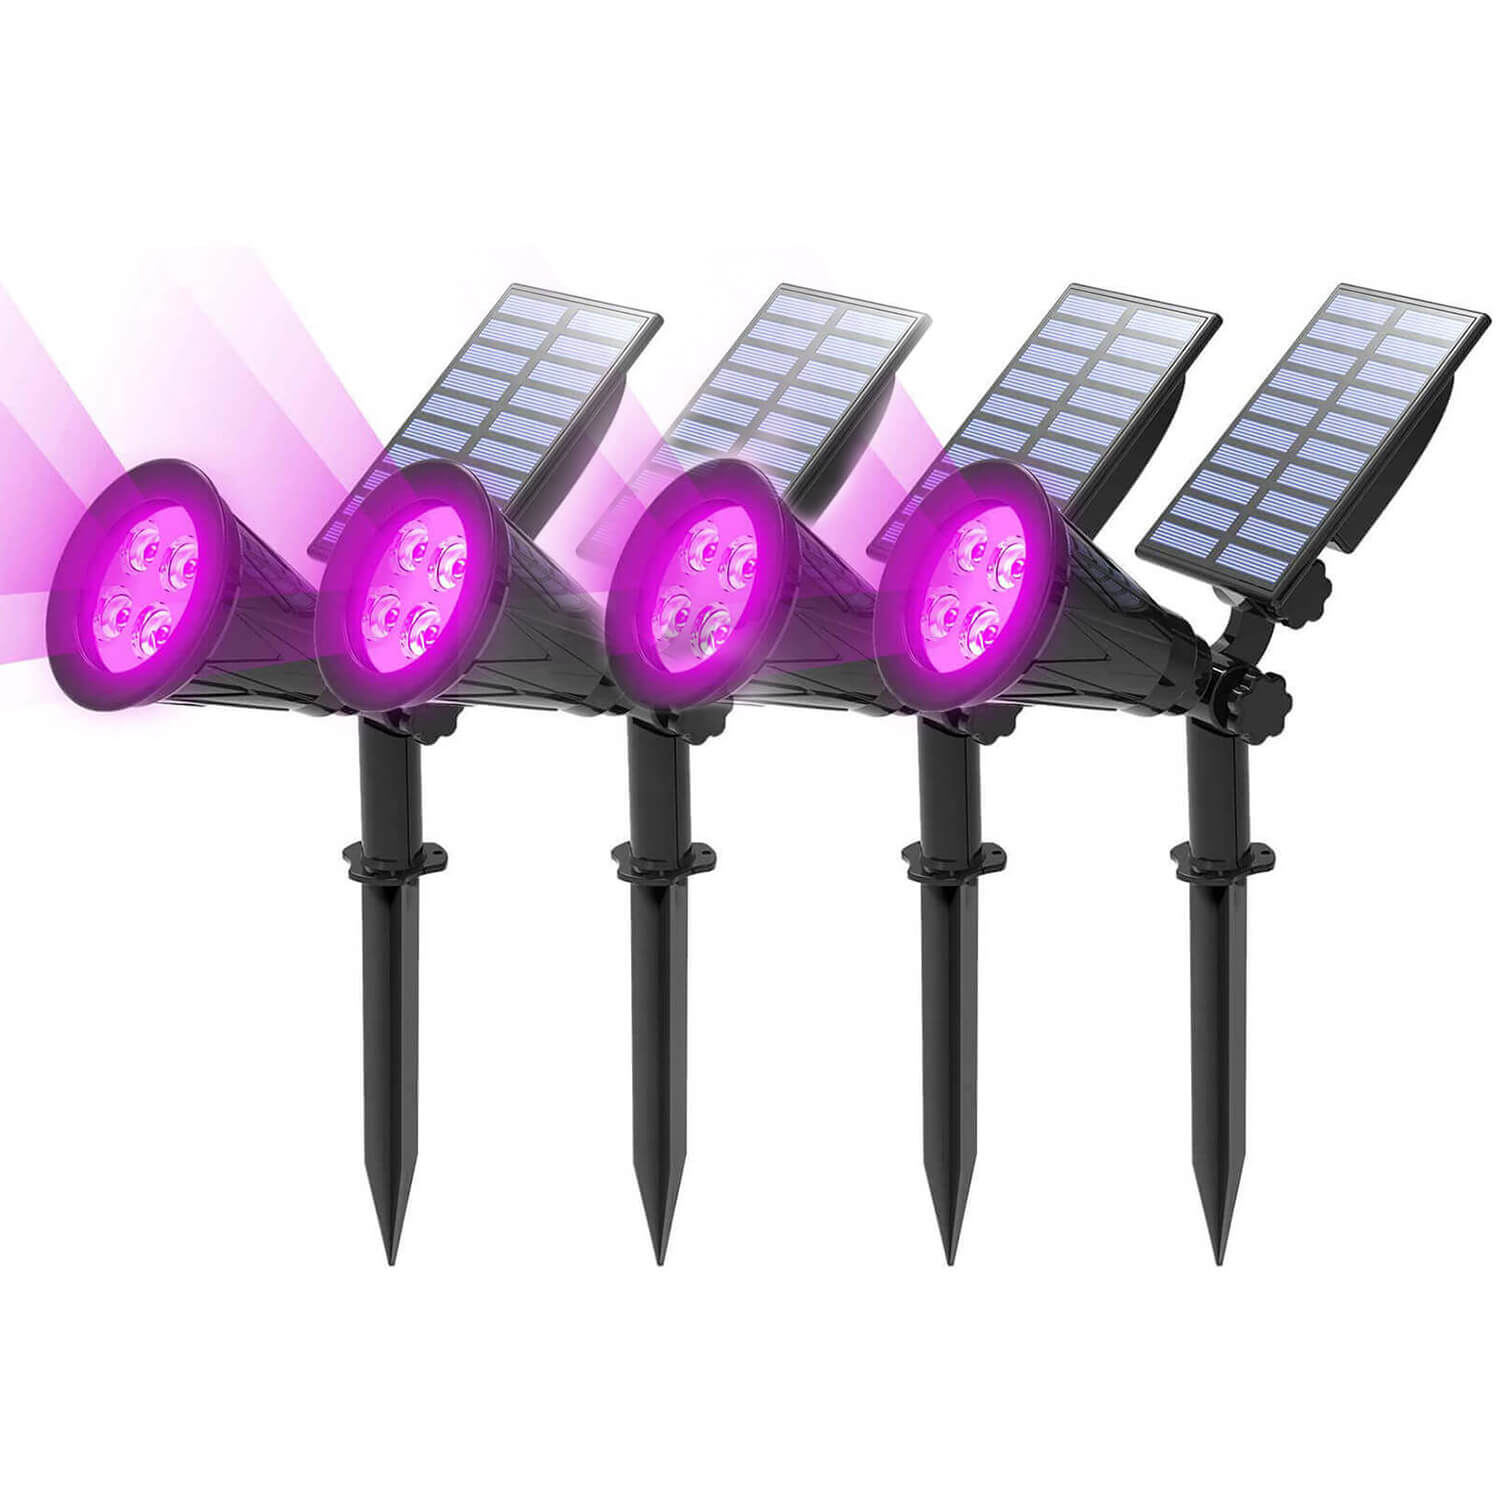 TSUN-purple-4-leds-Outdoor-Solar-Spot-Lights-4-pack